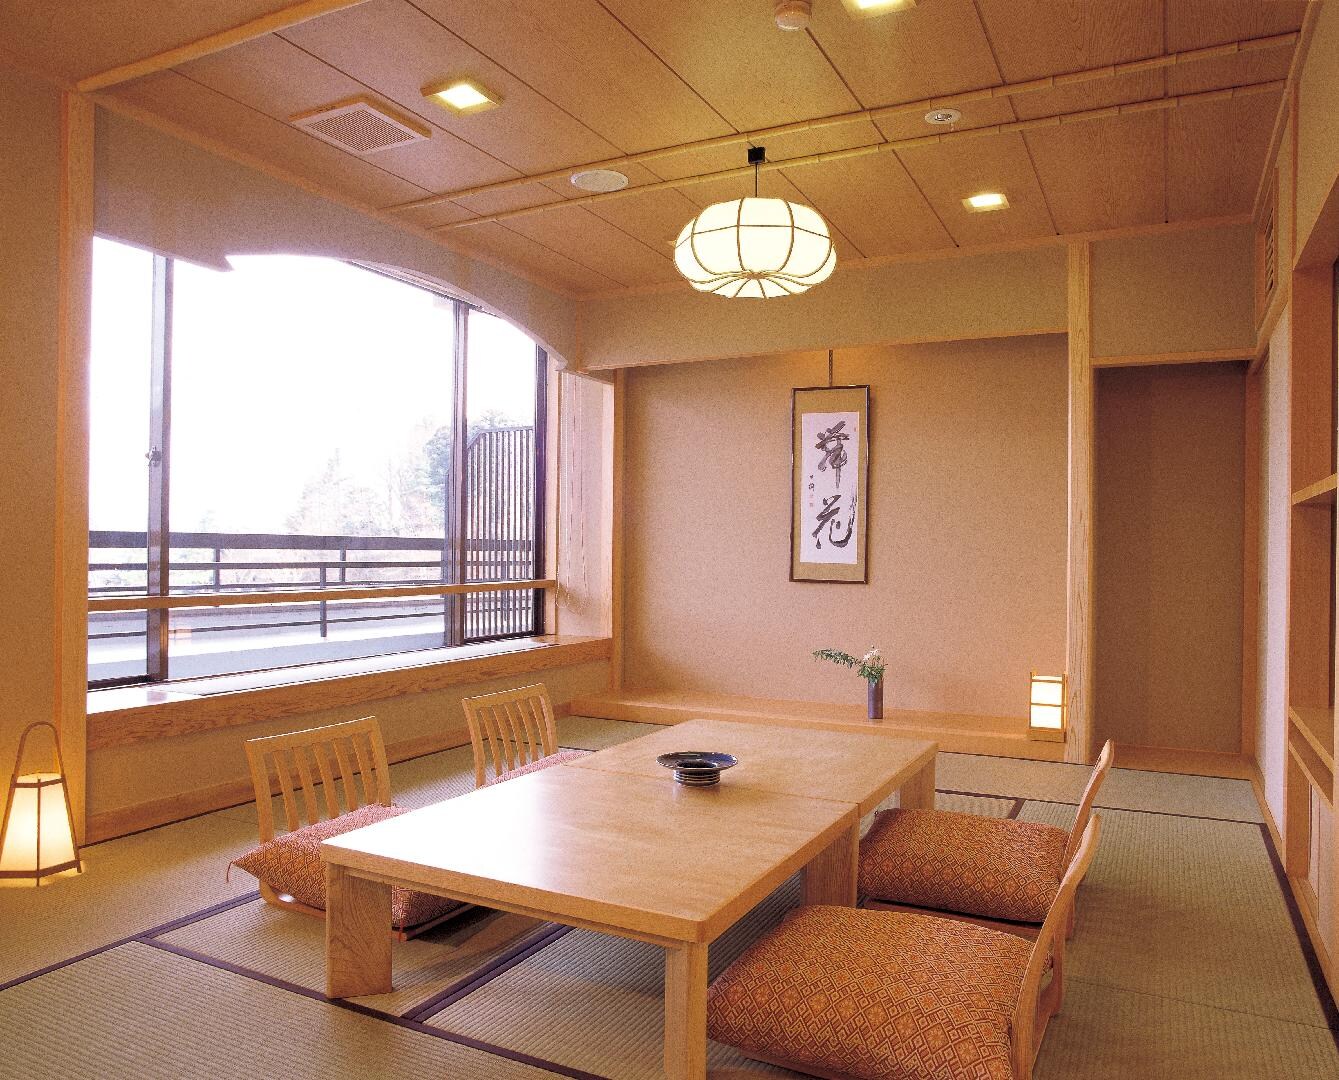 [Non-smoking room] Standard Japanese-style room on Kawaguchiko side, 10 tatami mats